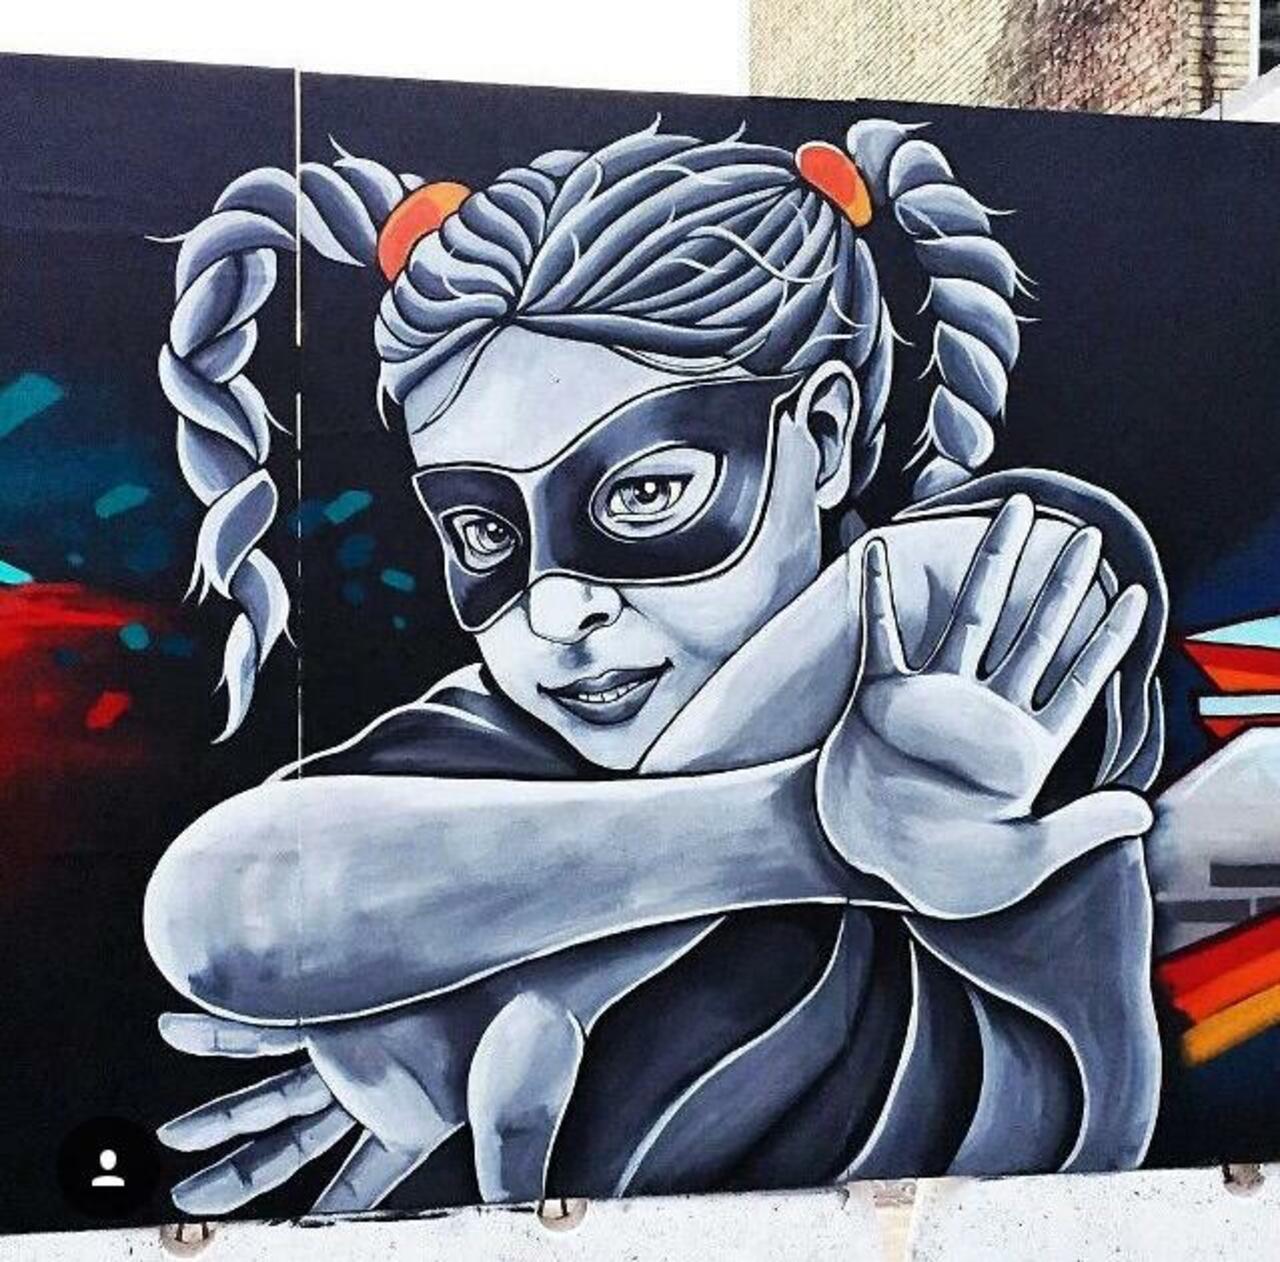 RT @buzz_sandyltn: Street Art by Stinehvid 

#art #graffiti #mural #streetart http://t.co/dM6ynrzRbf